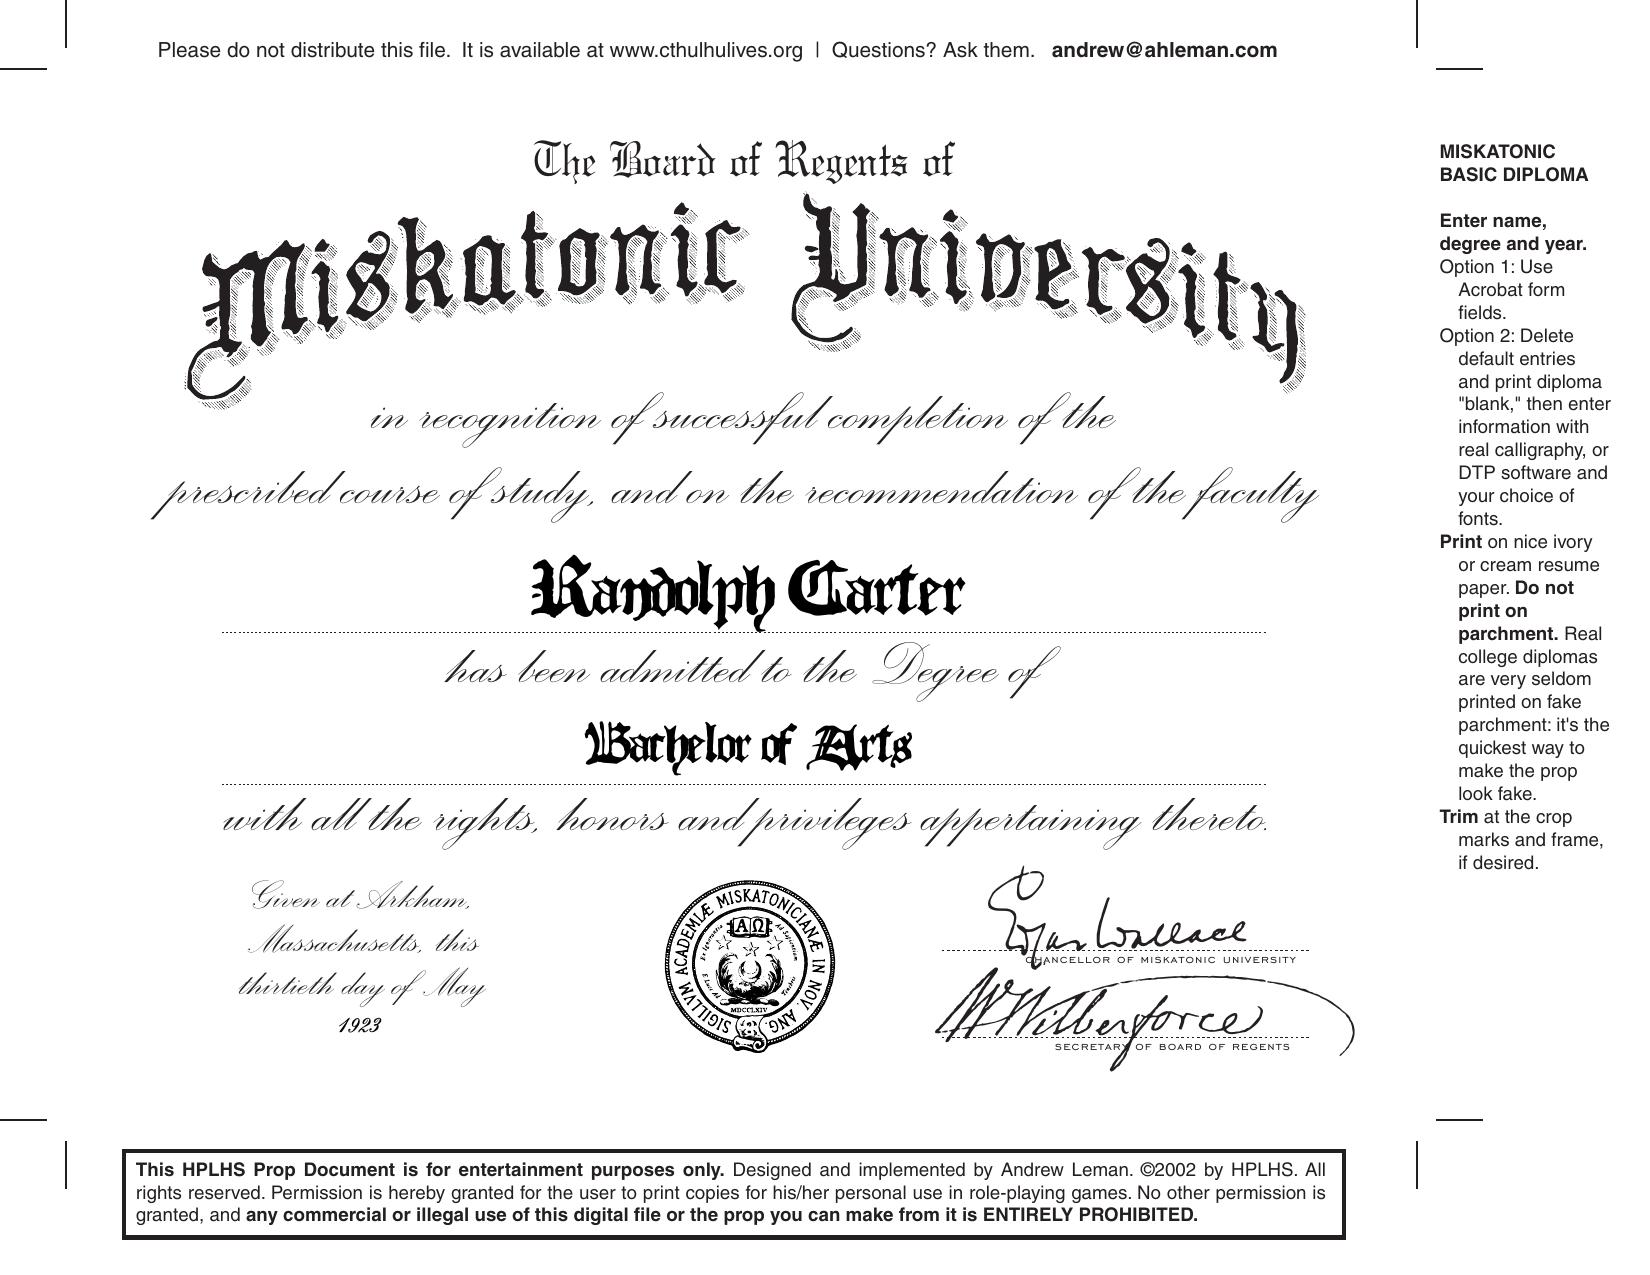 CoC Miskatonic University Diploma